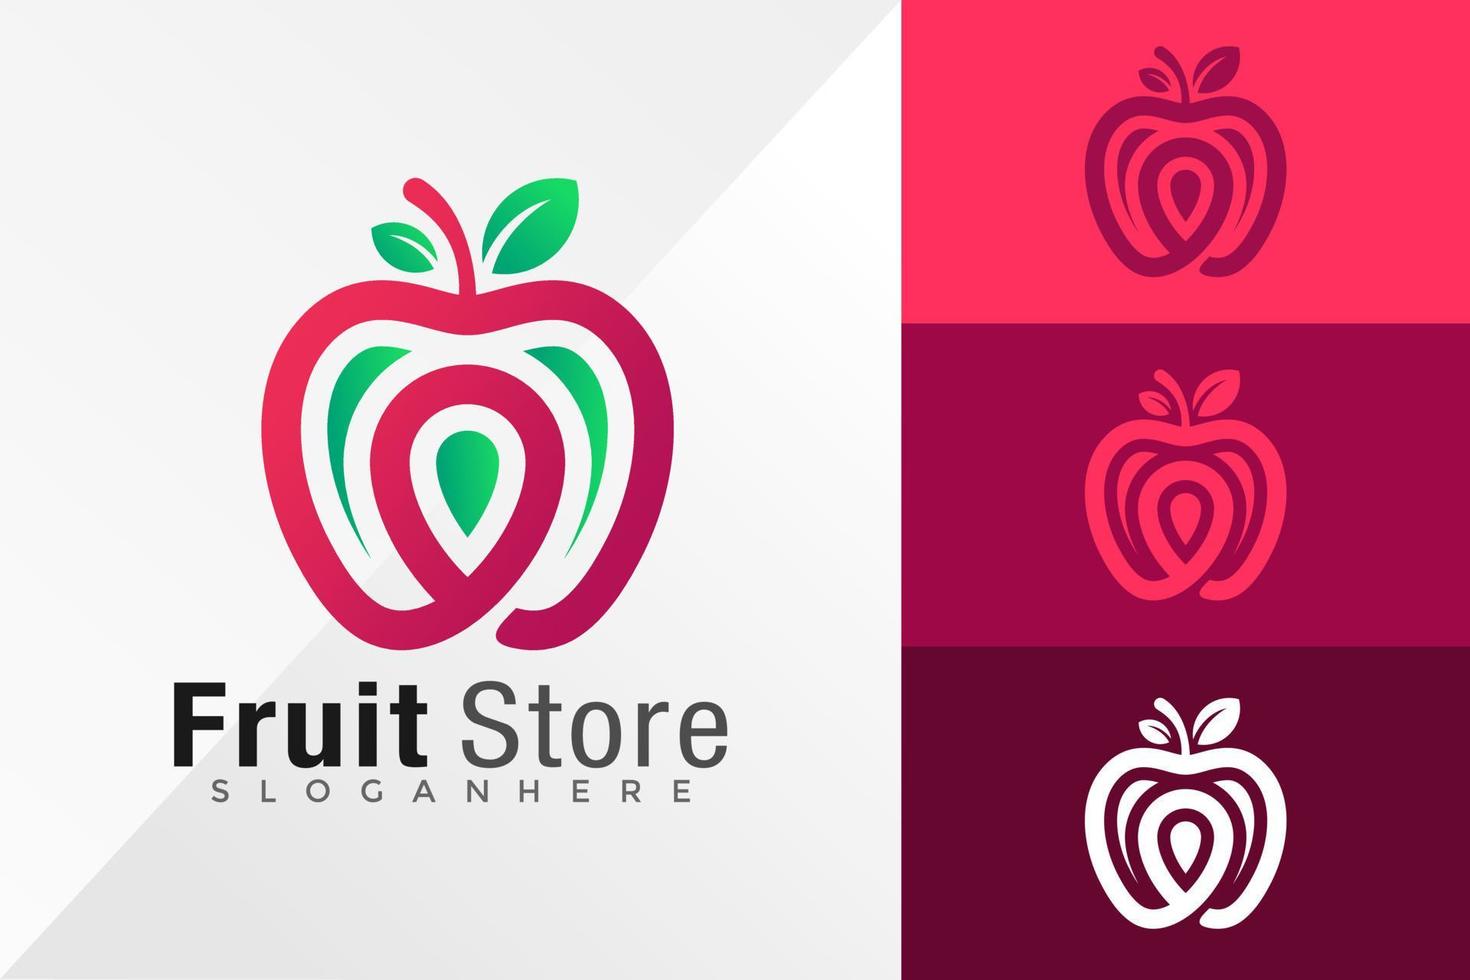 Apple Fruit Store Pin Location Logo Design Vector illustration template